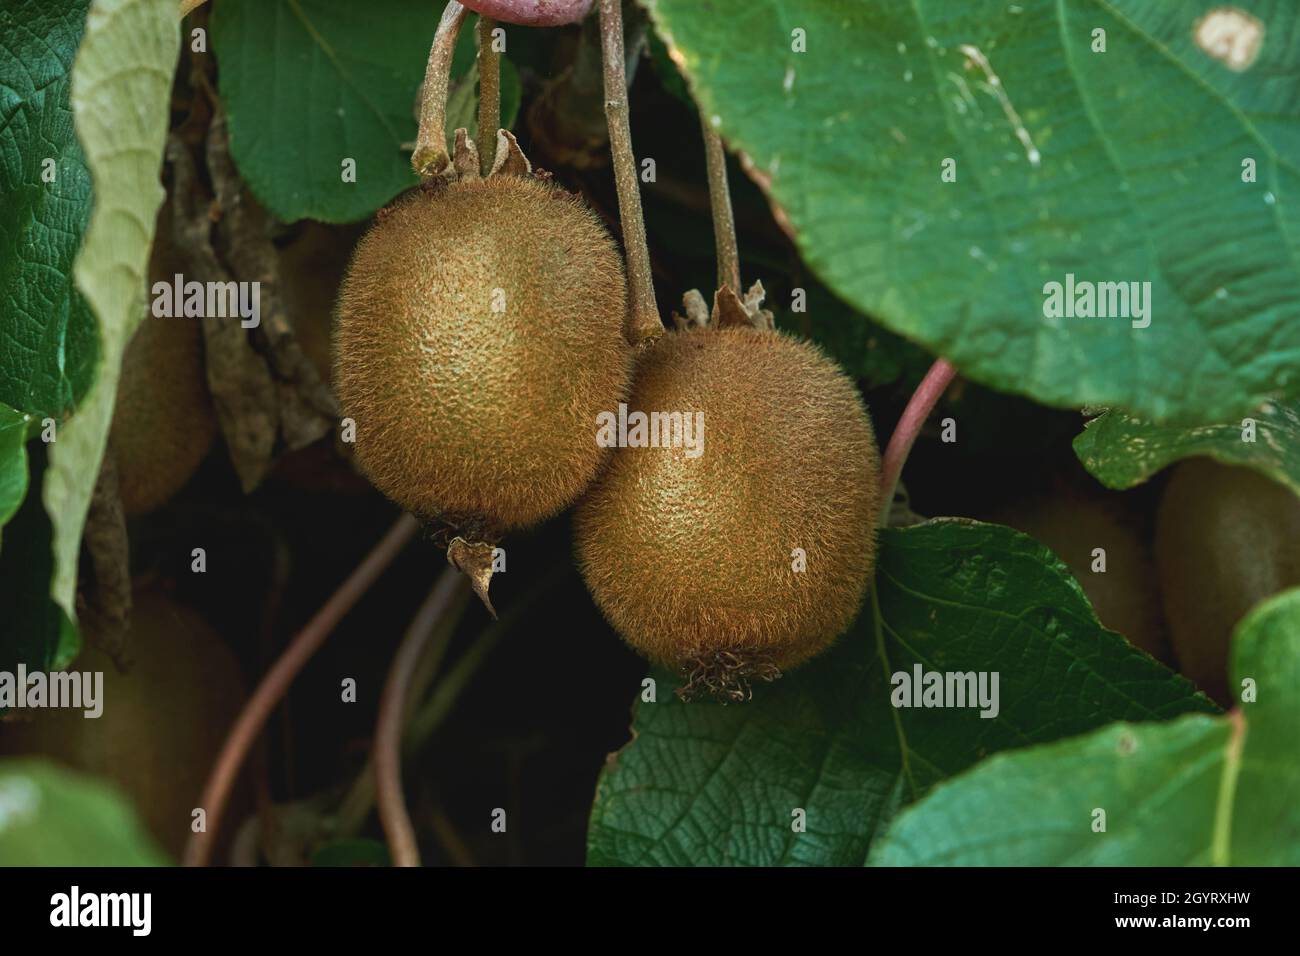 Kiwifruits growing in Actinidia deliciosa woody vine, selective focus Stock Photo